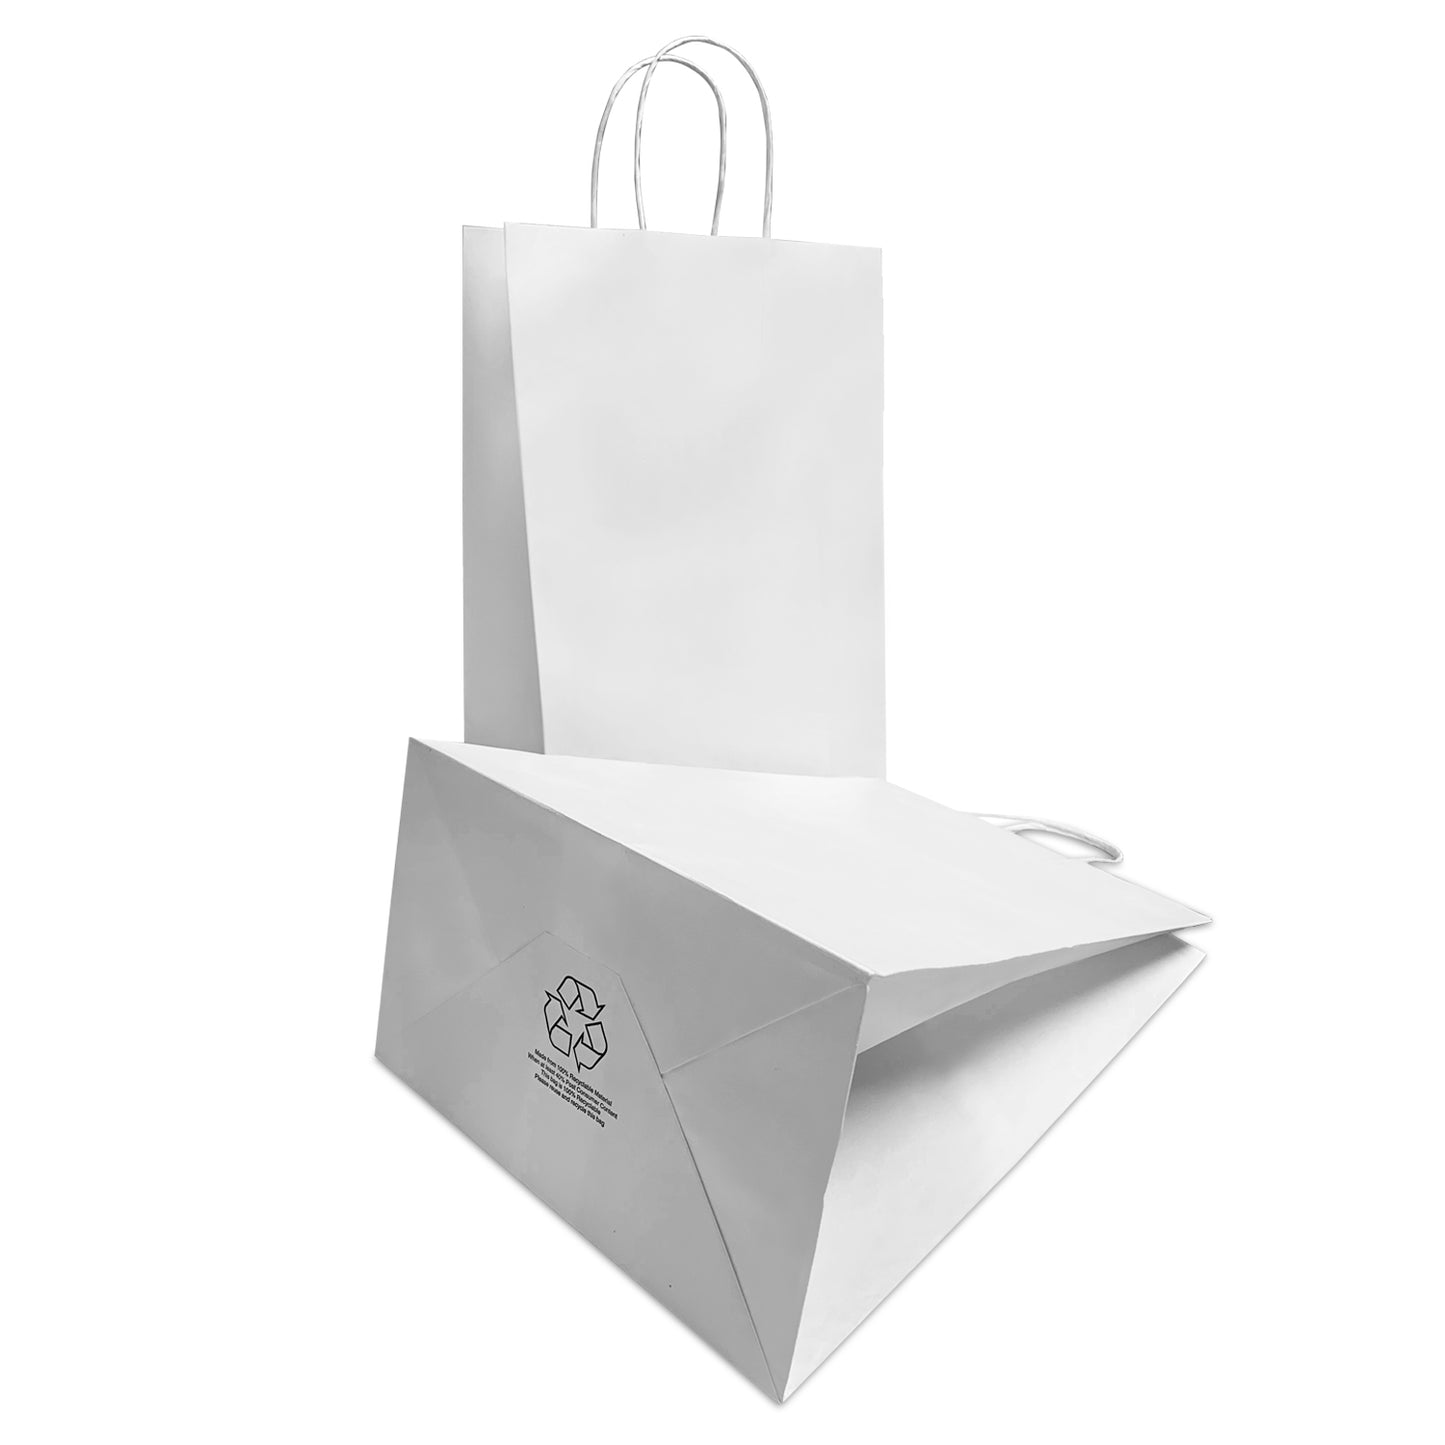 Bottle 9x5.75x13.5 White Paper Bags Twisted Handles; $0.39/pc, 200pcs/case, sold by case